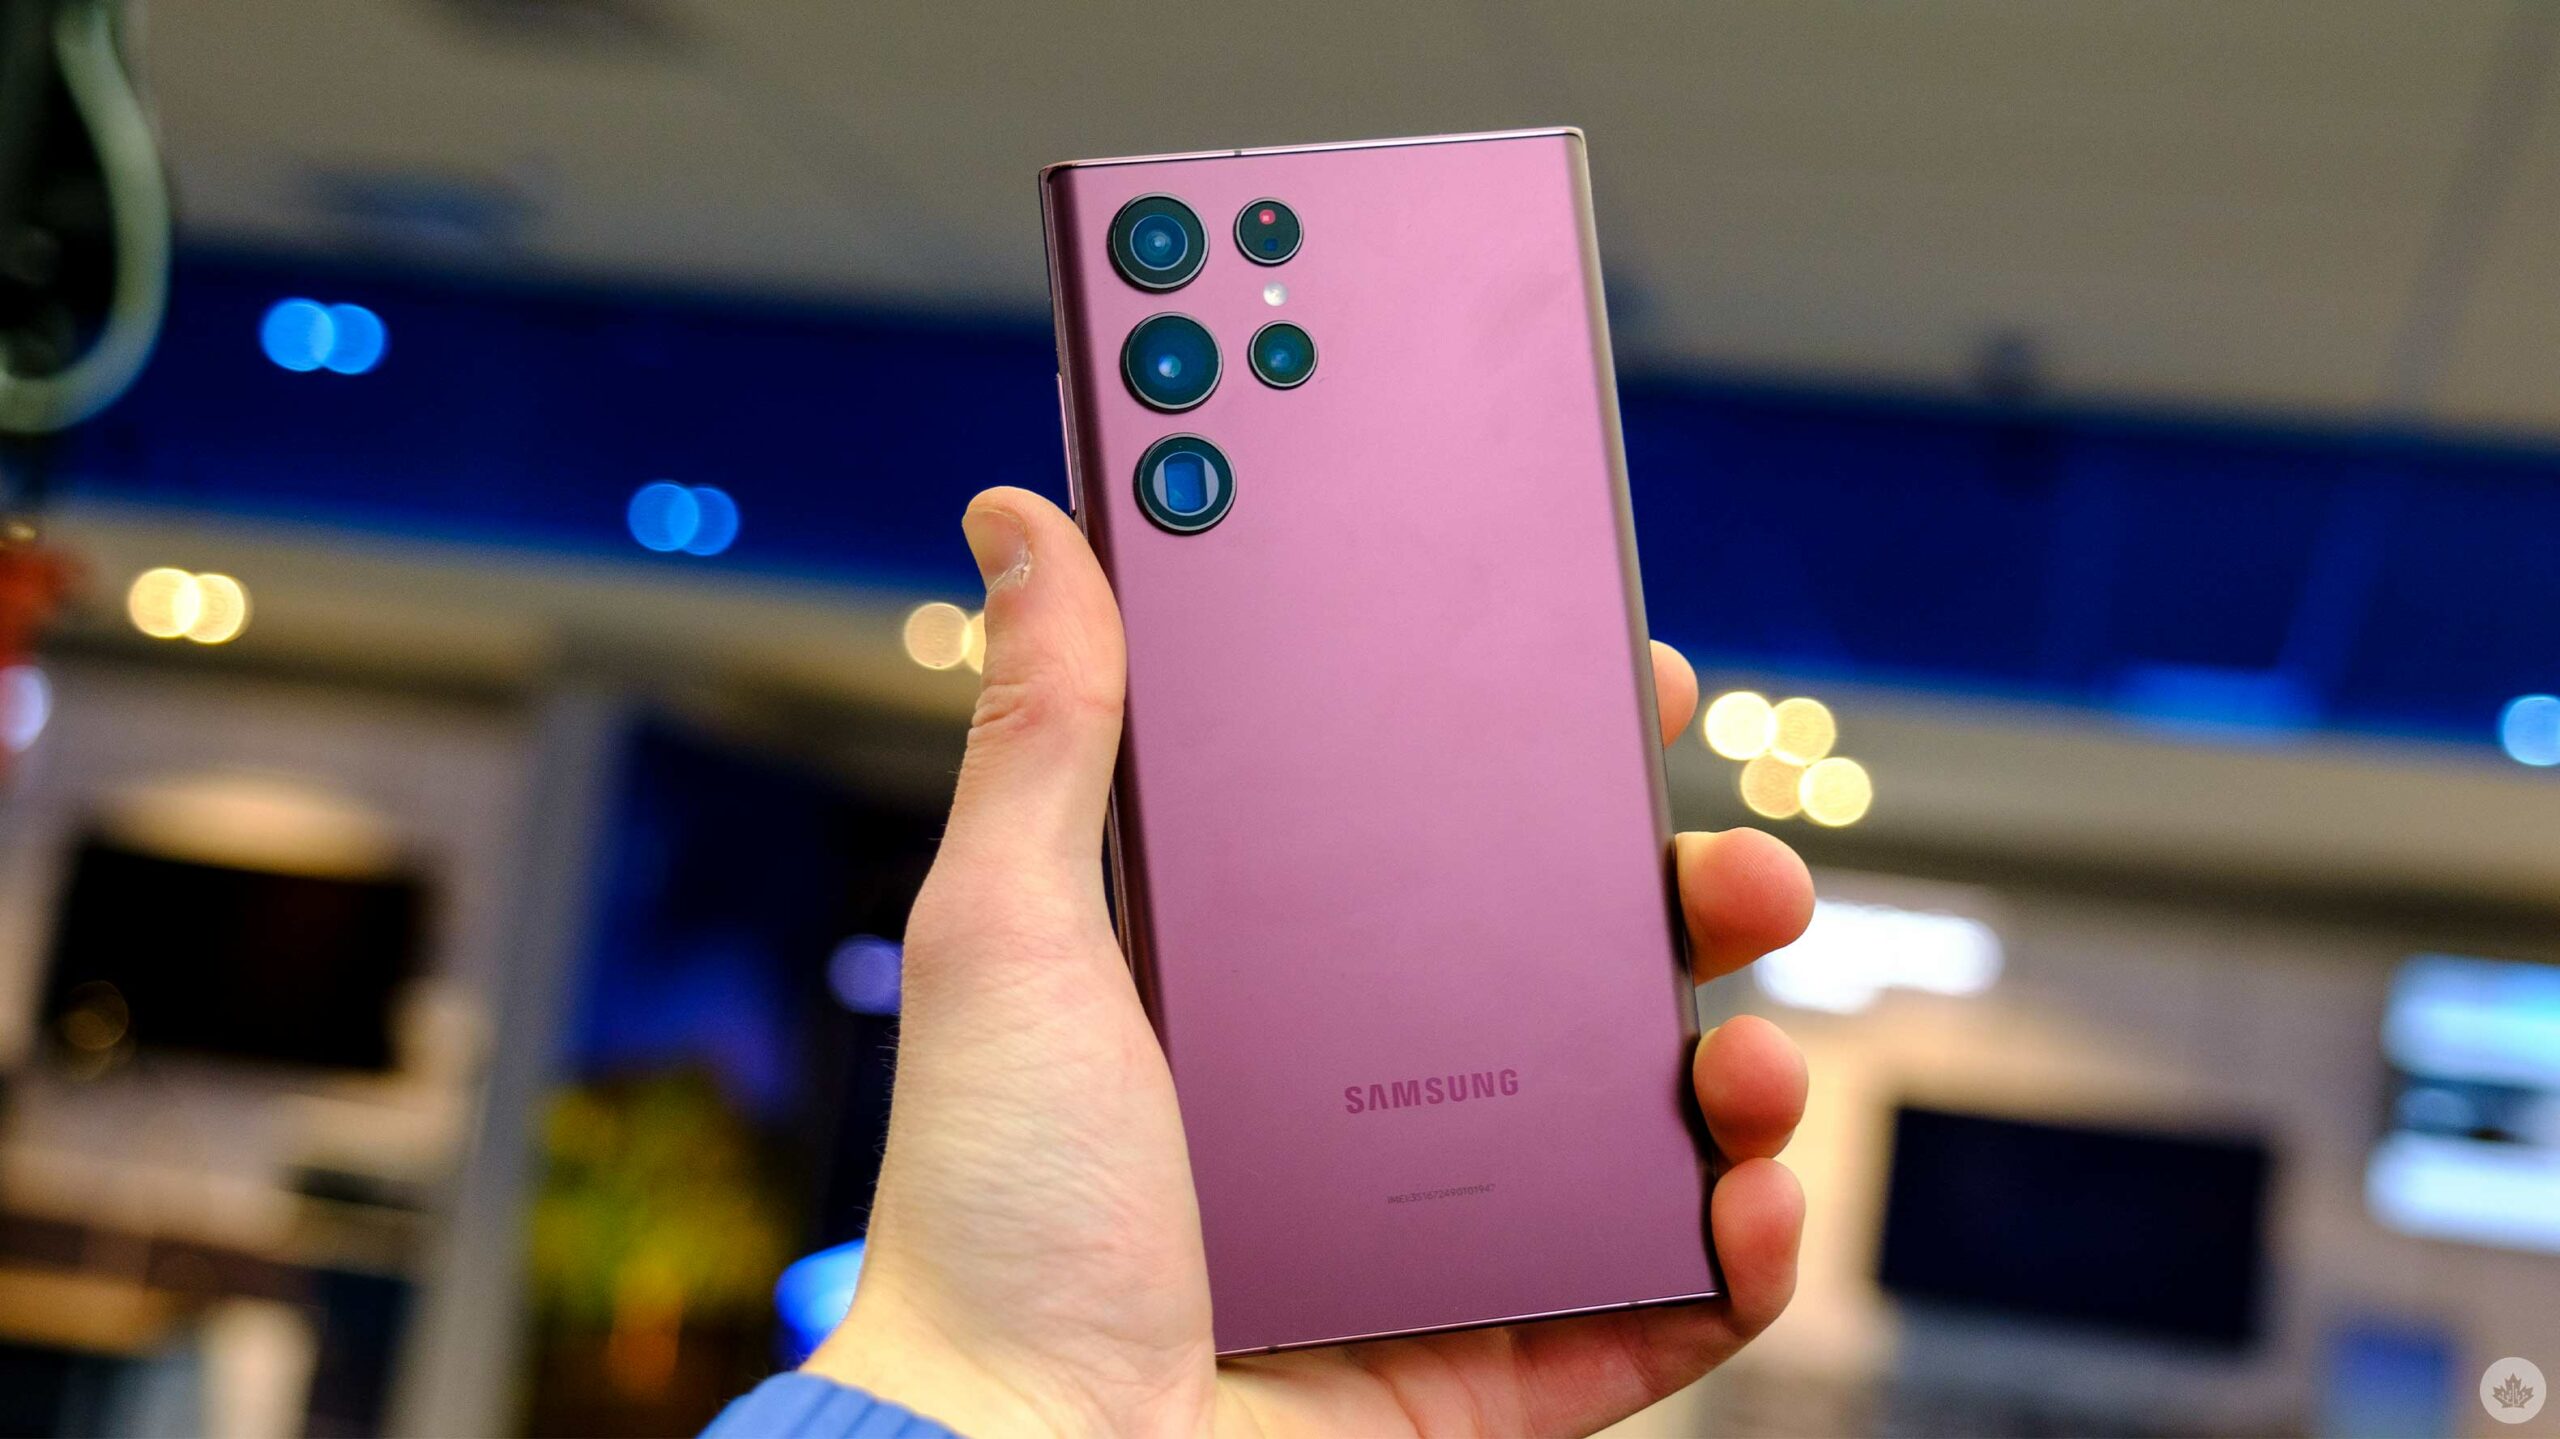 Samsung Galaxy S22 Ultra, S22+, S22 and Galaxy Tab S8: Specs